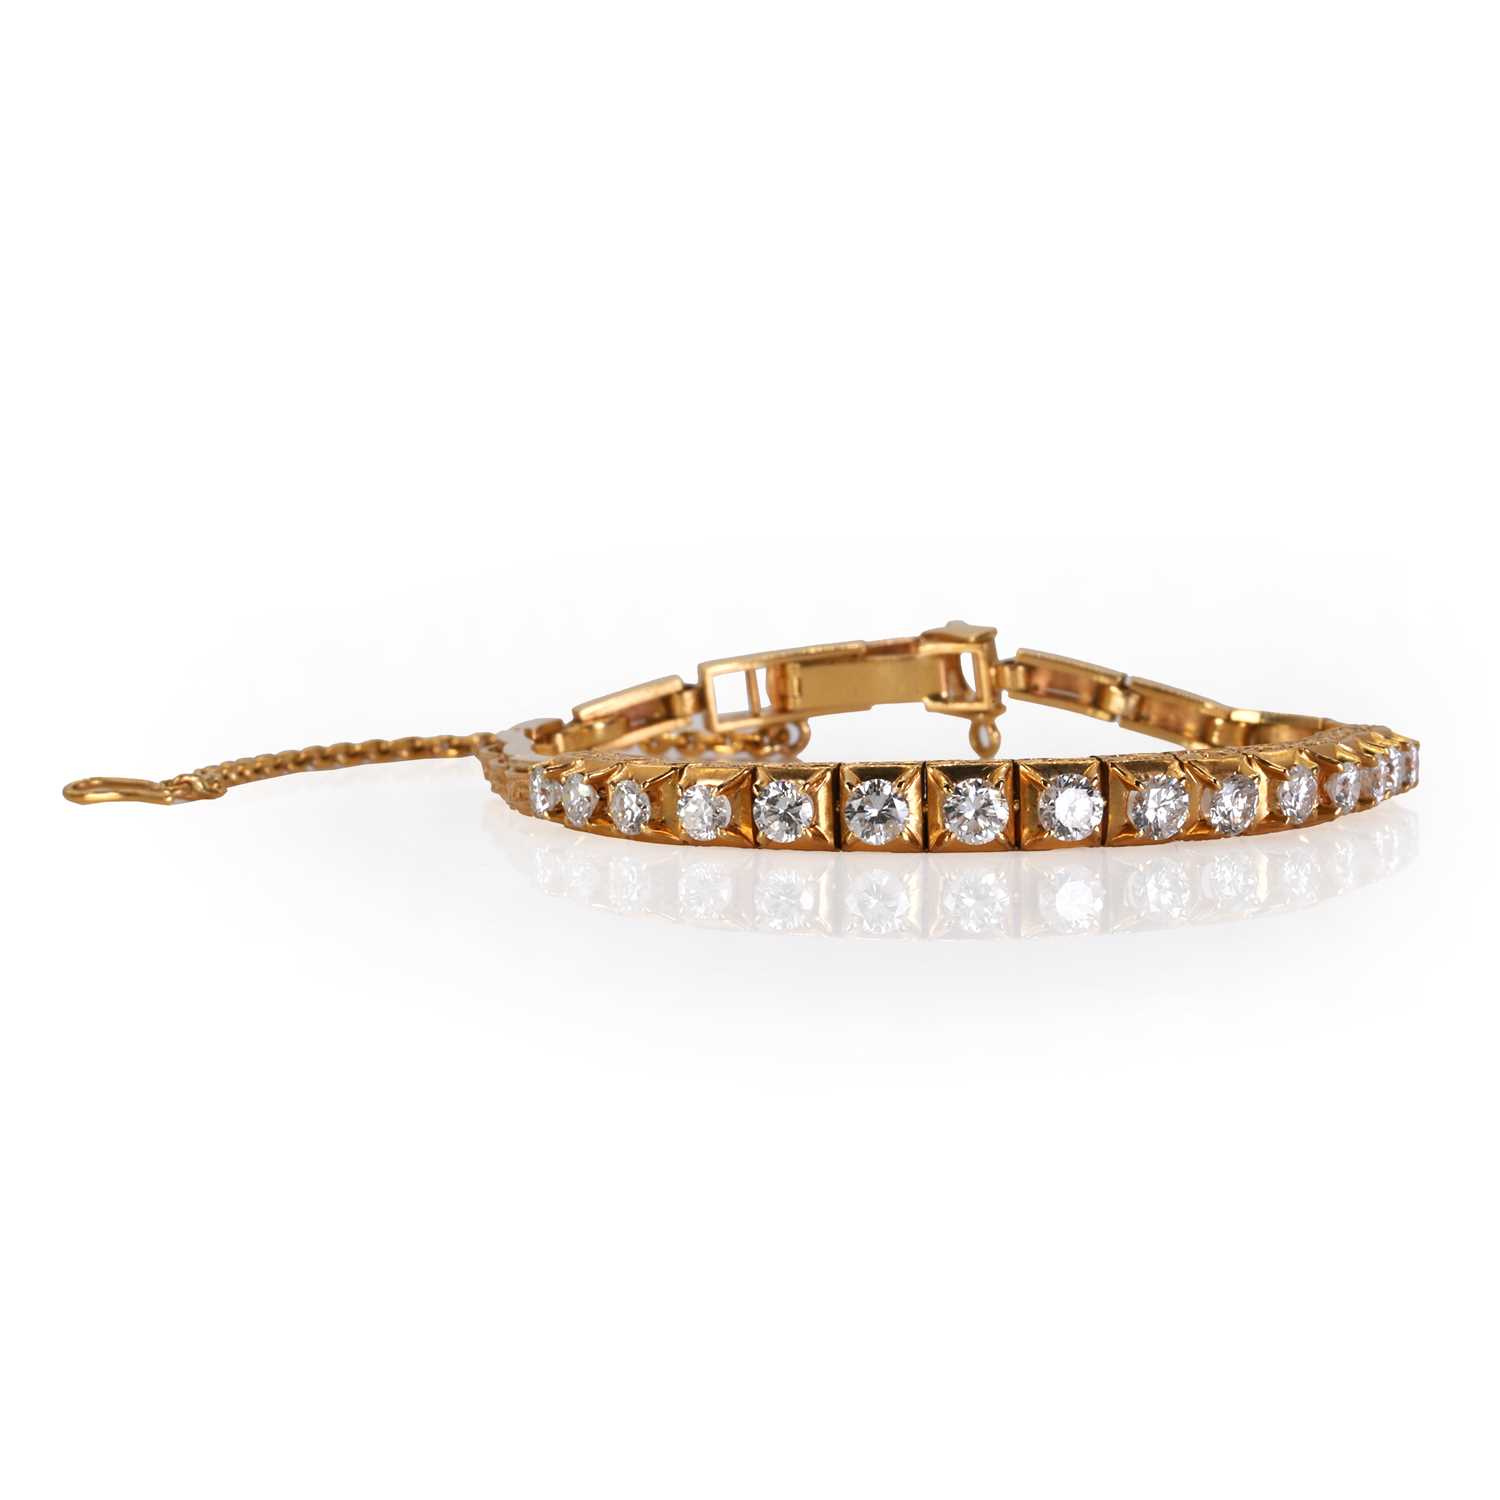 A single row diamond bracelet,